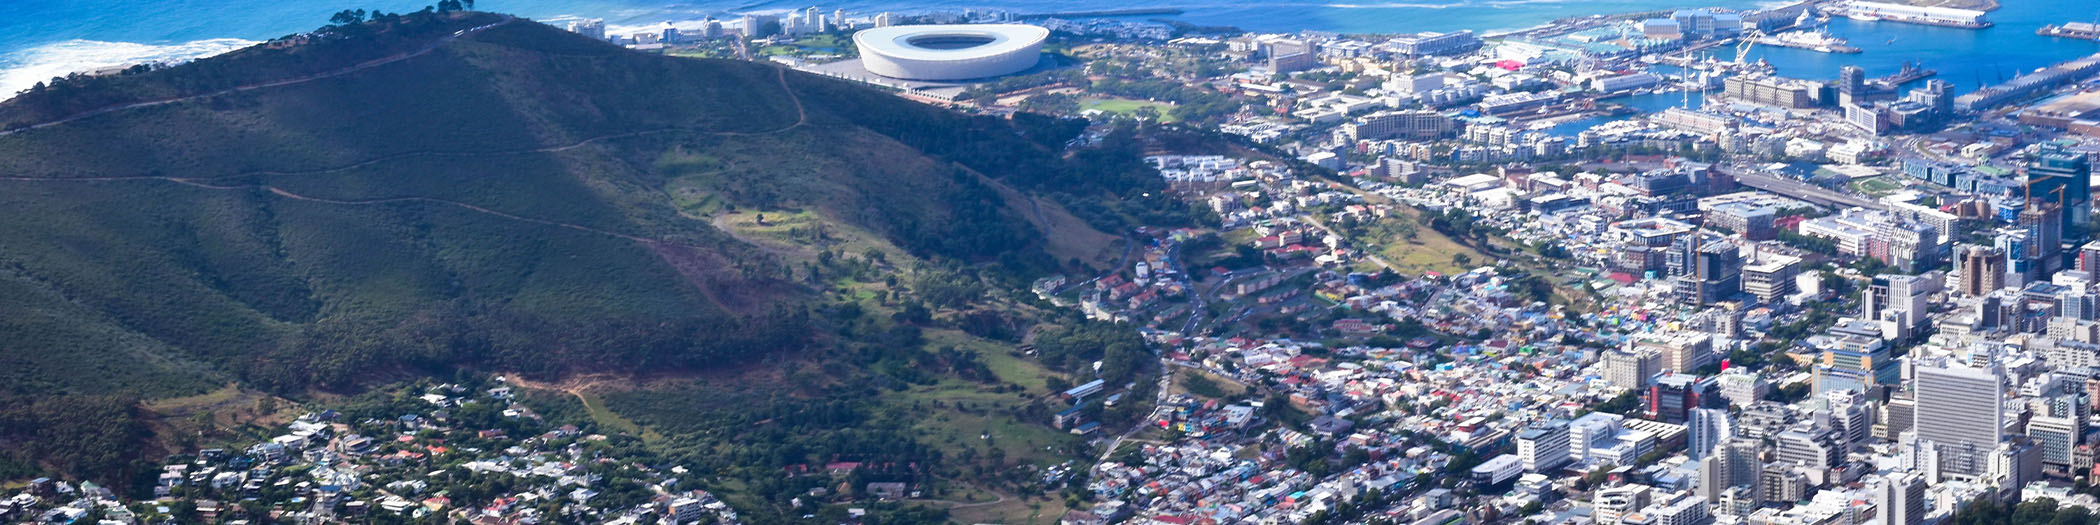 Cityscape of Cape Town